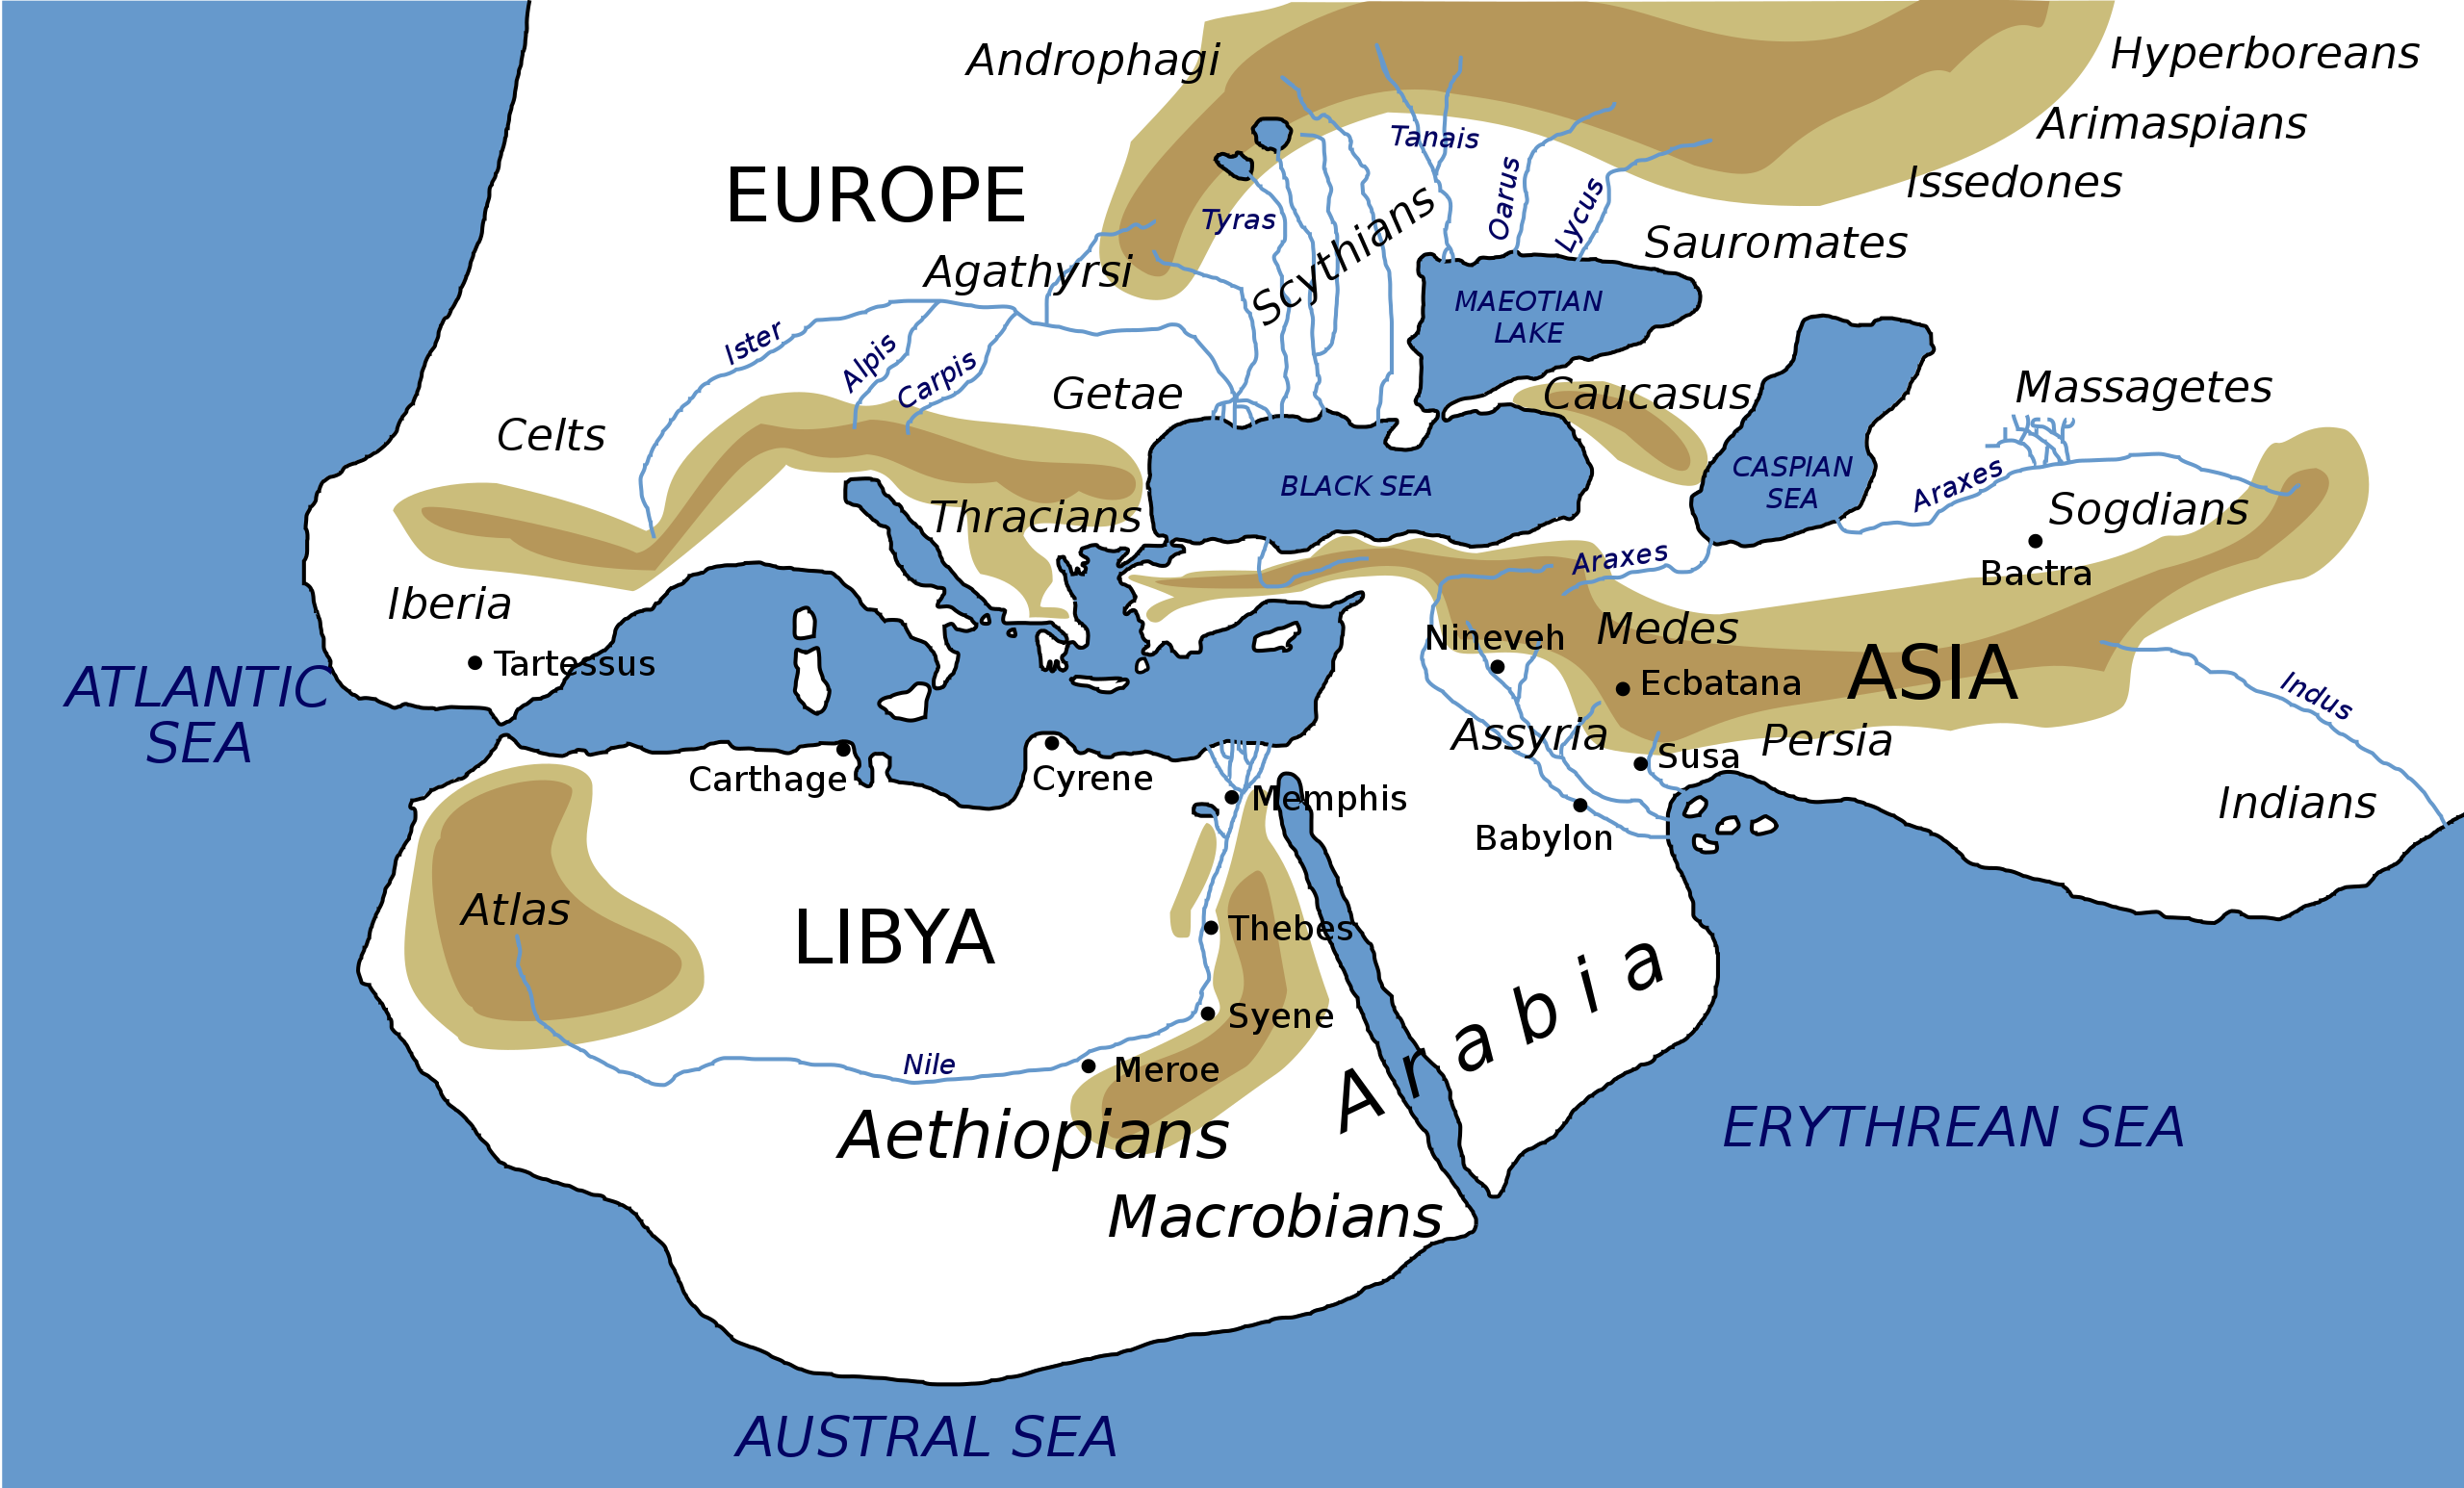 World map based on description by Herodotus mentioning Hyperborea